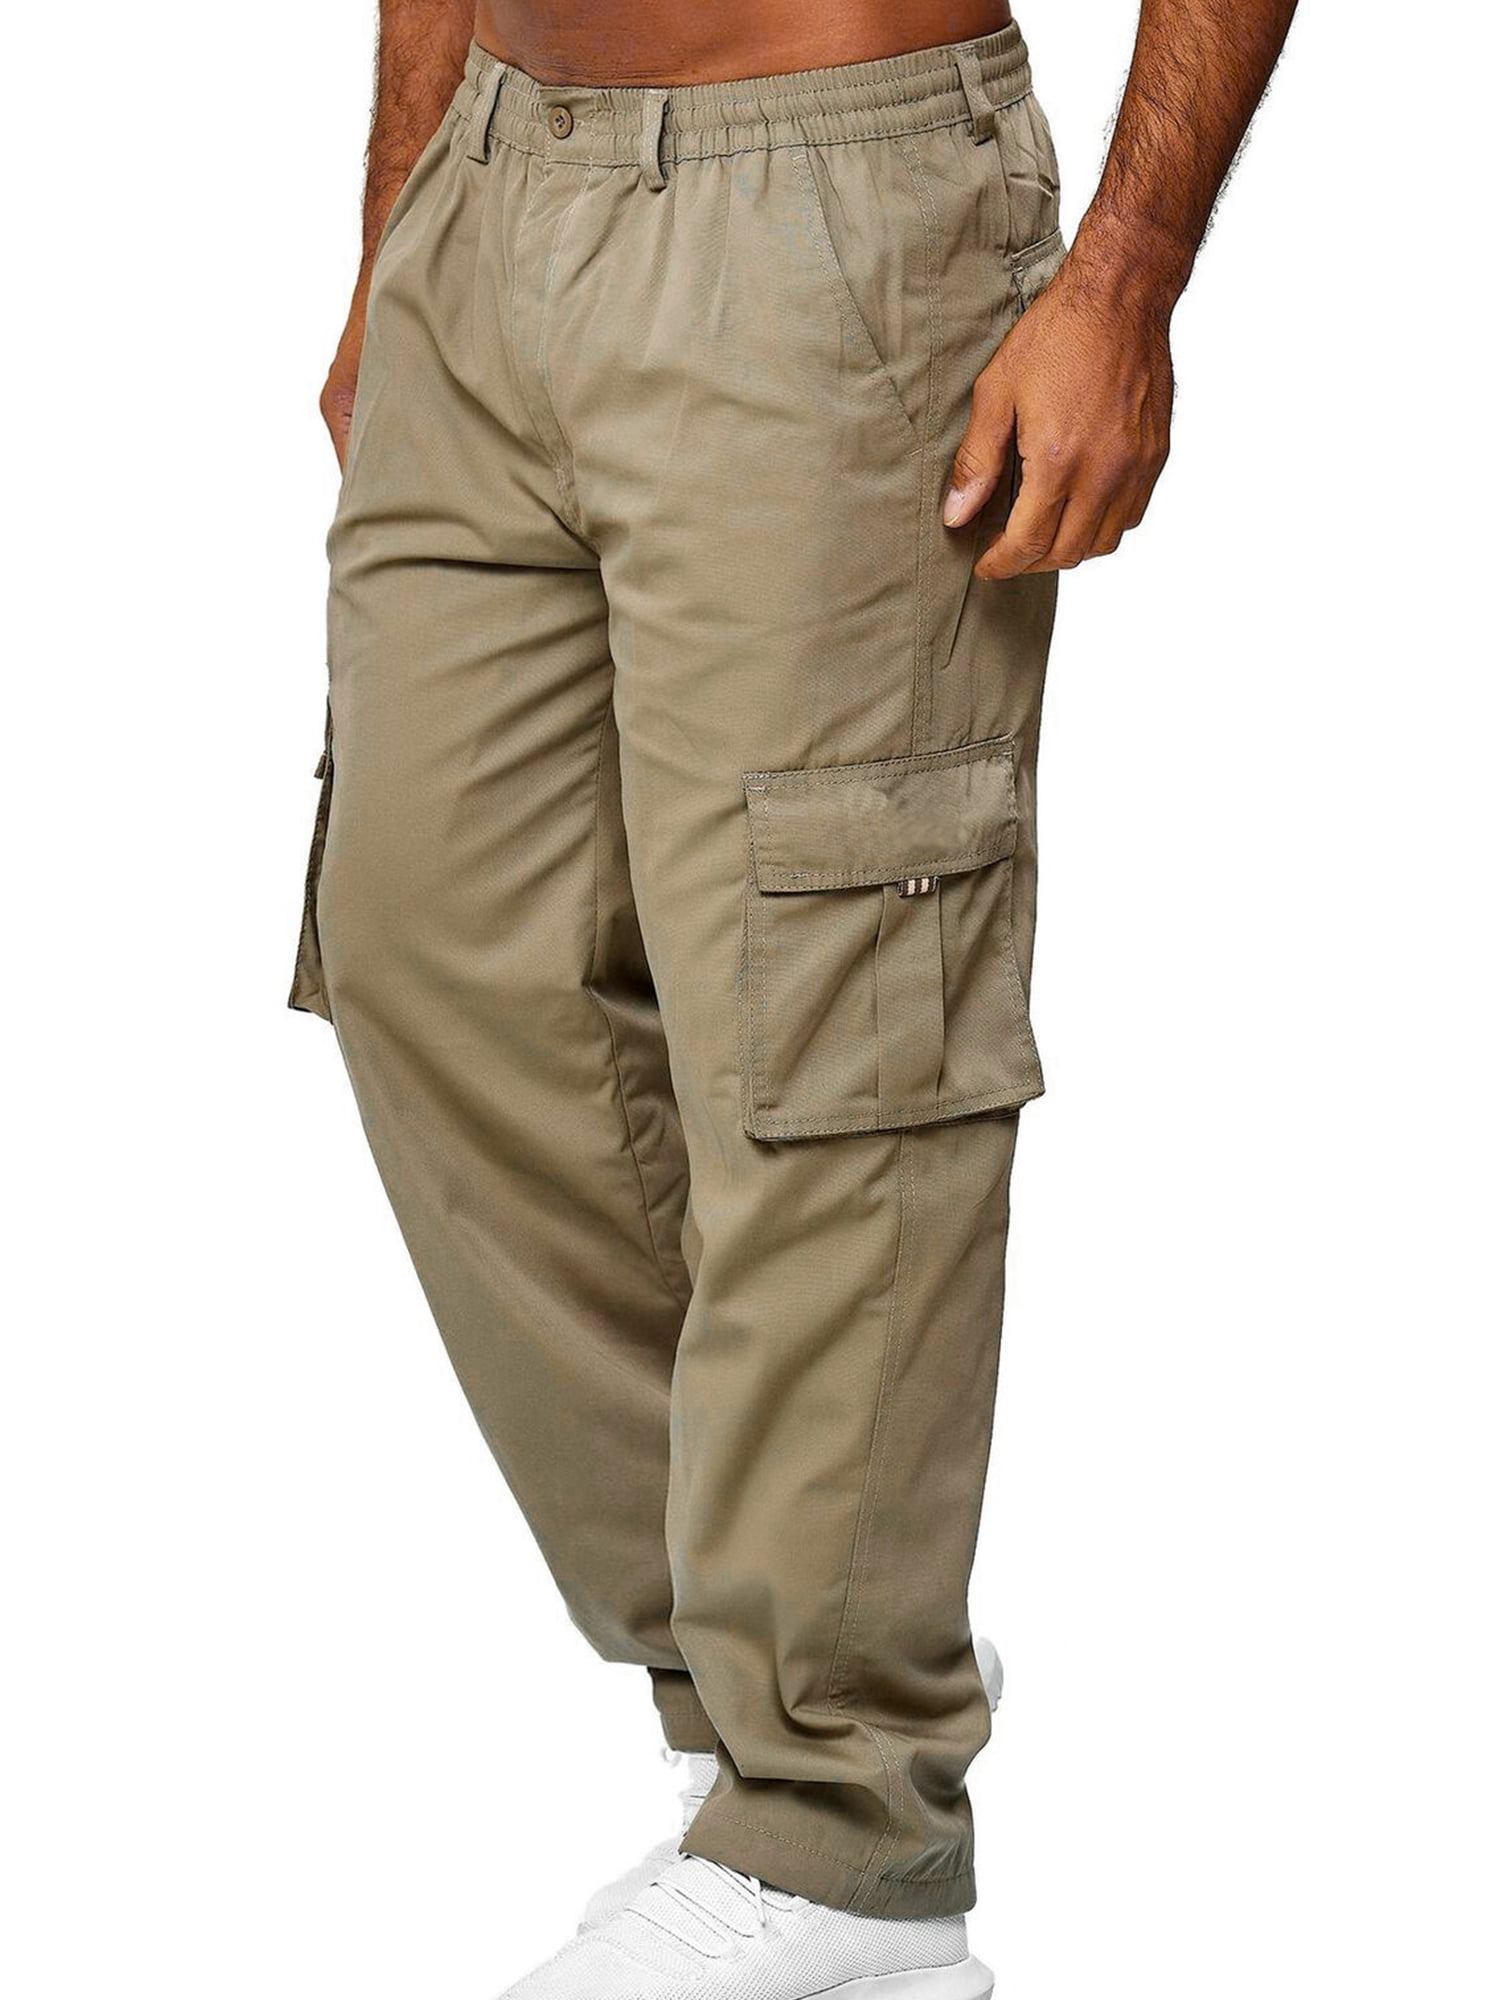 BOCOMAL FR Cargo Pants(multiple pockets) 7.5OZ Lightweight Work